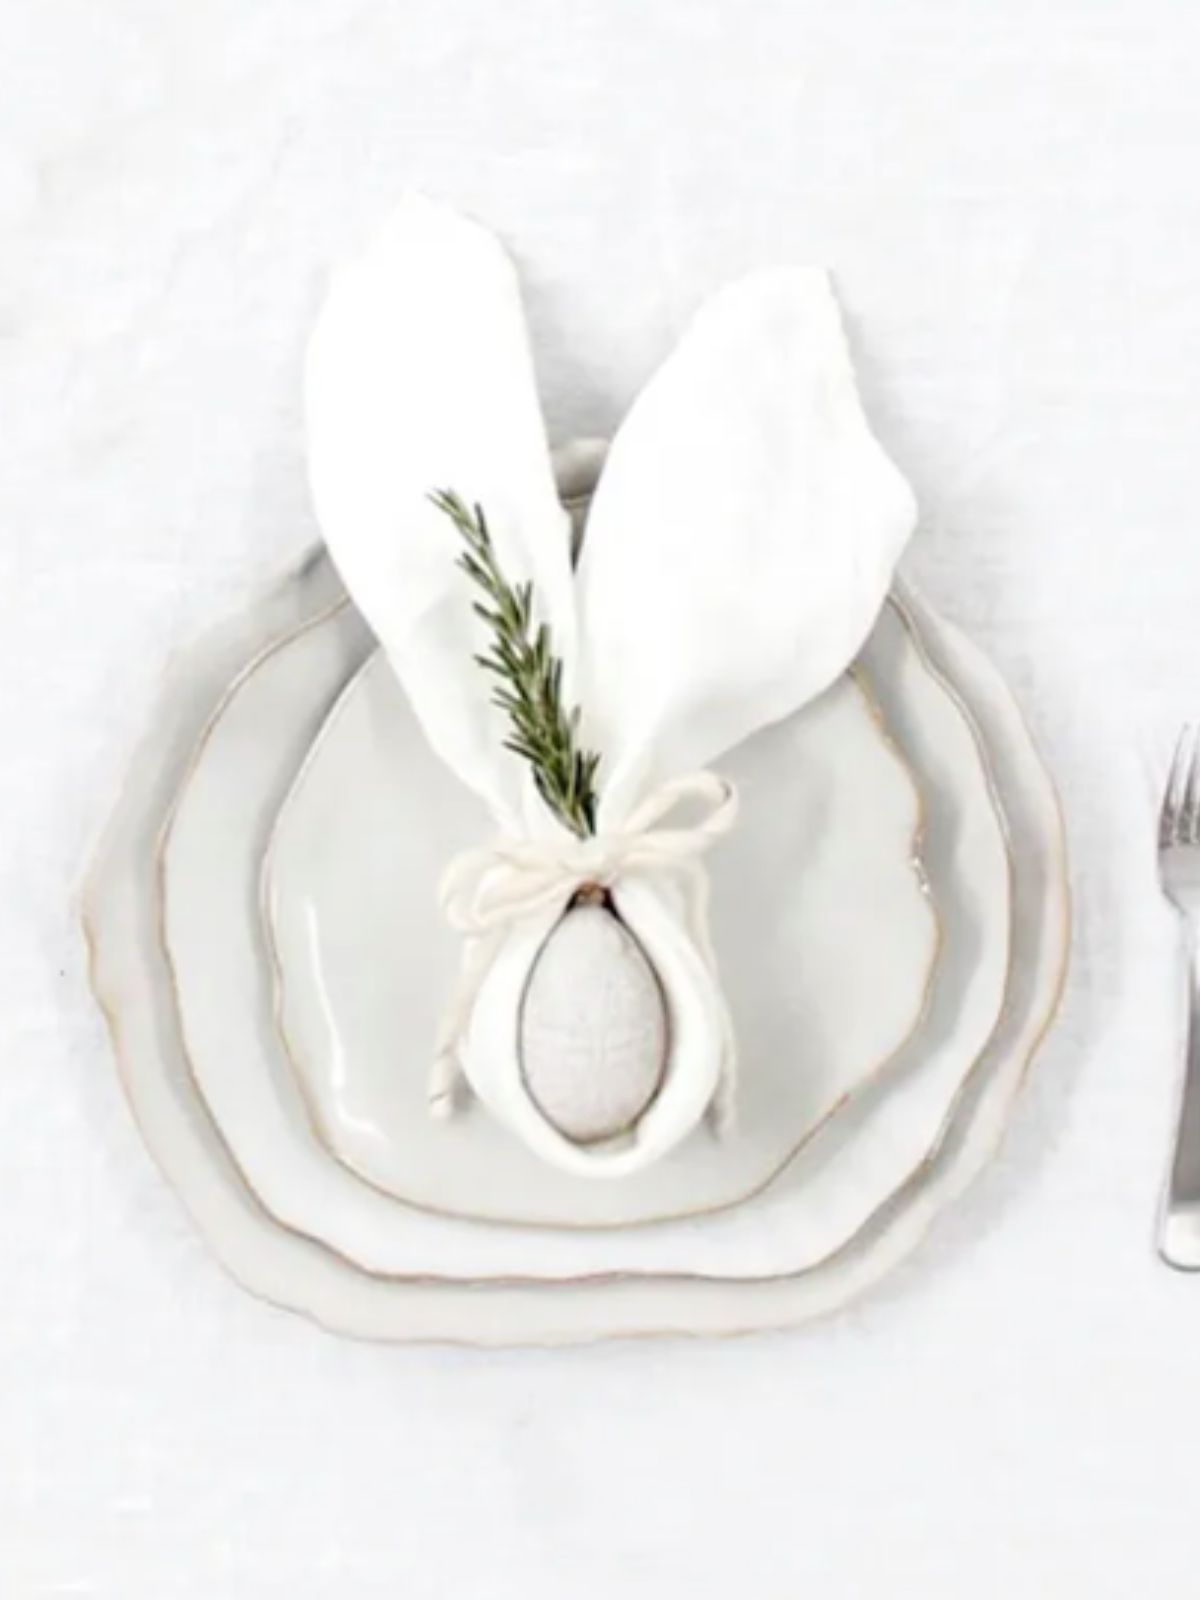 White, irregular ceramic dining tableware plates.